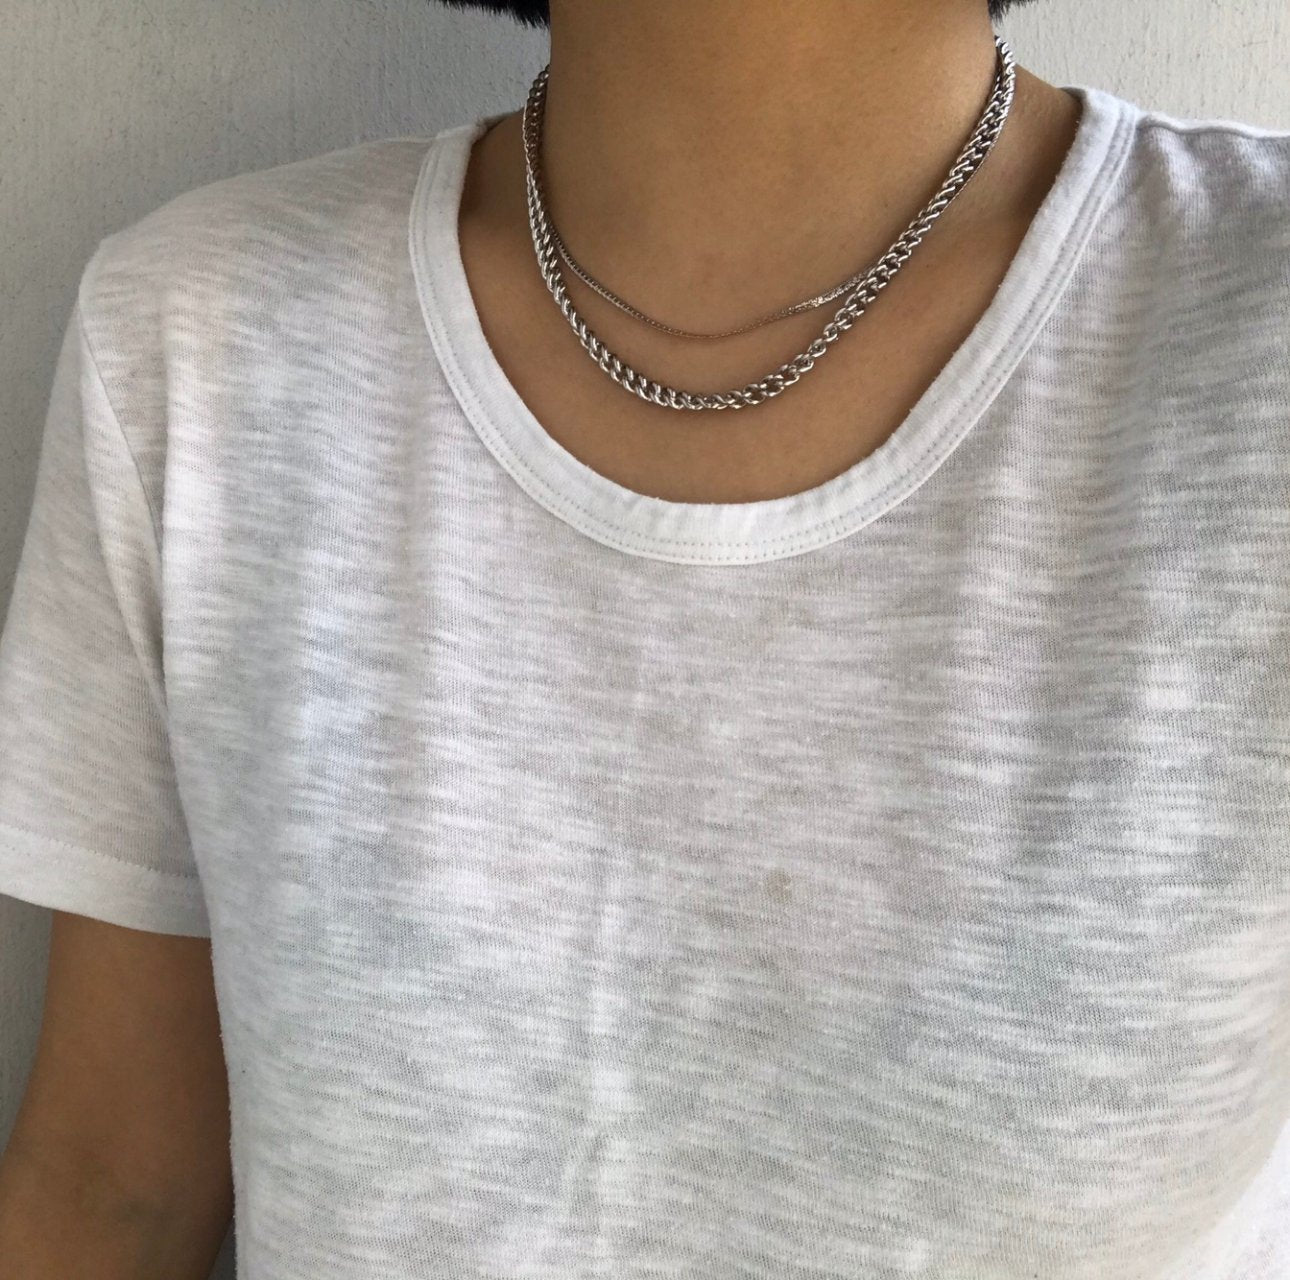 Cara Necklace in Silver